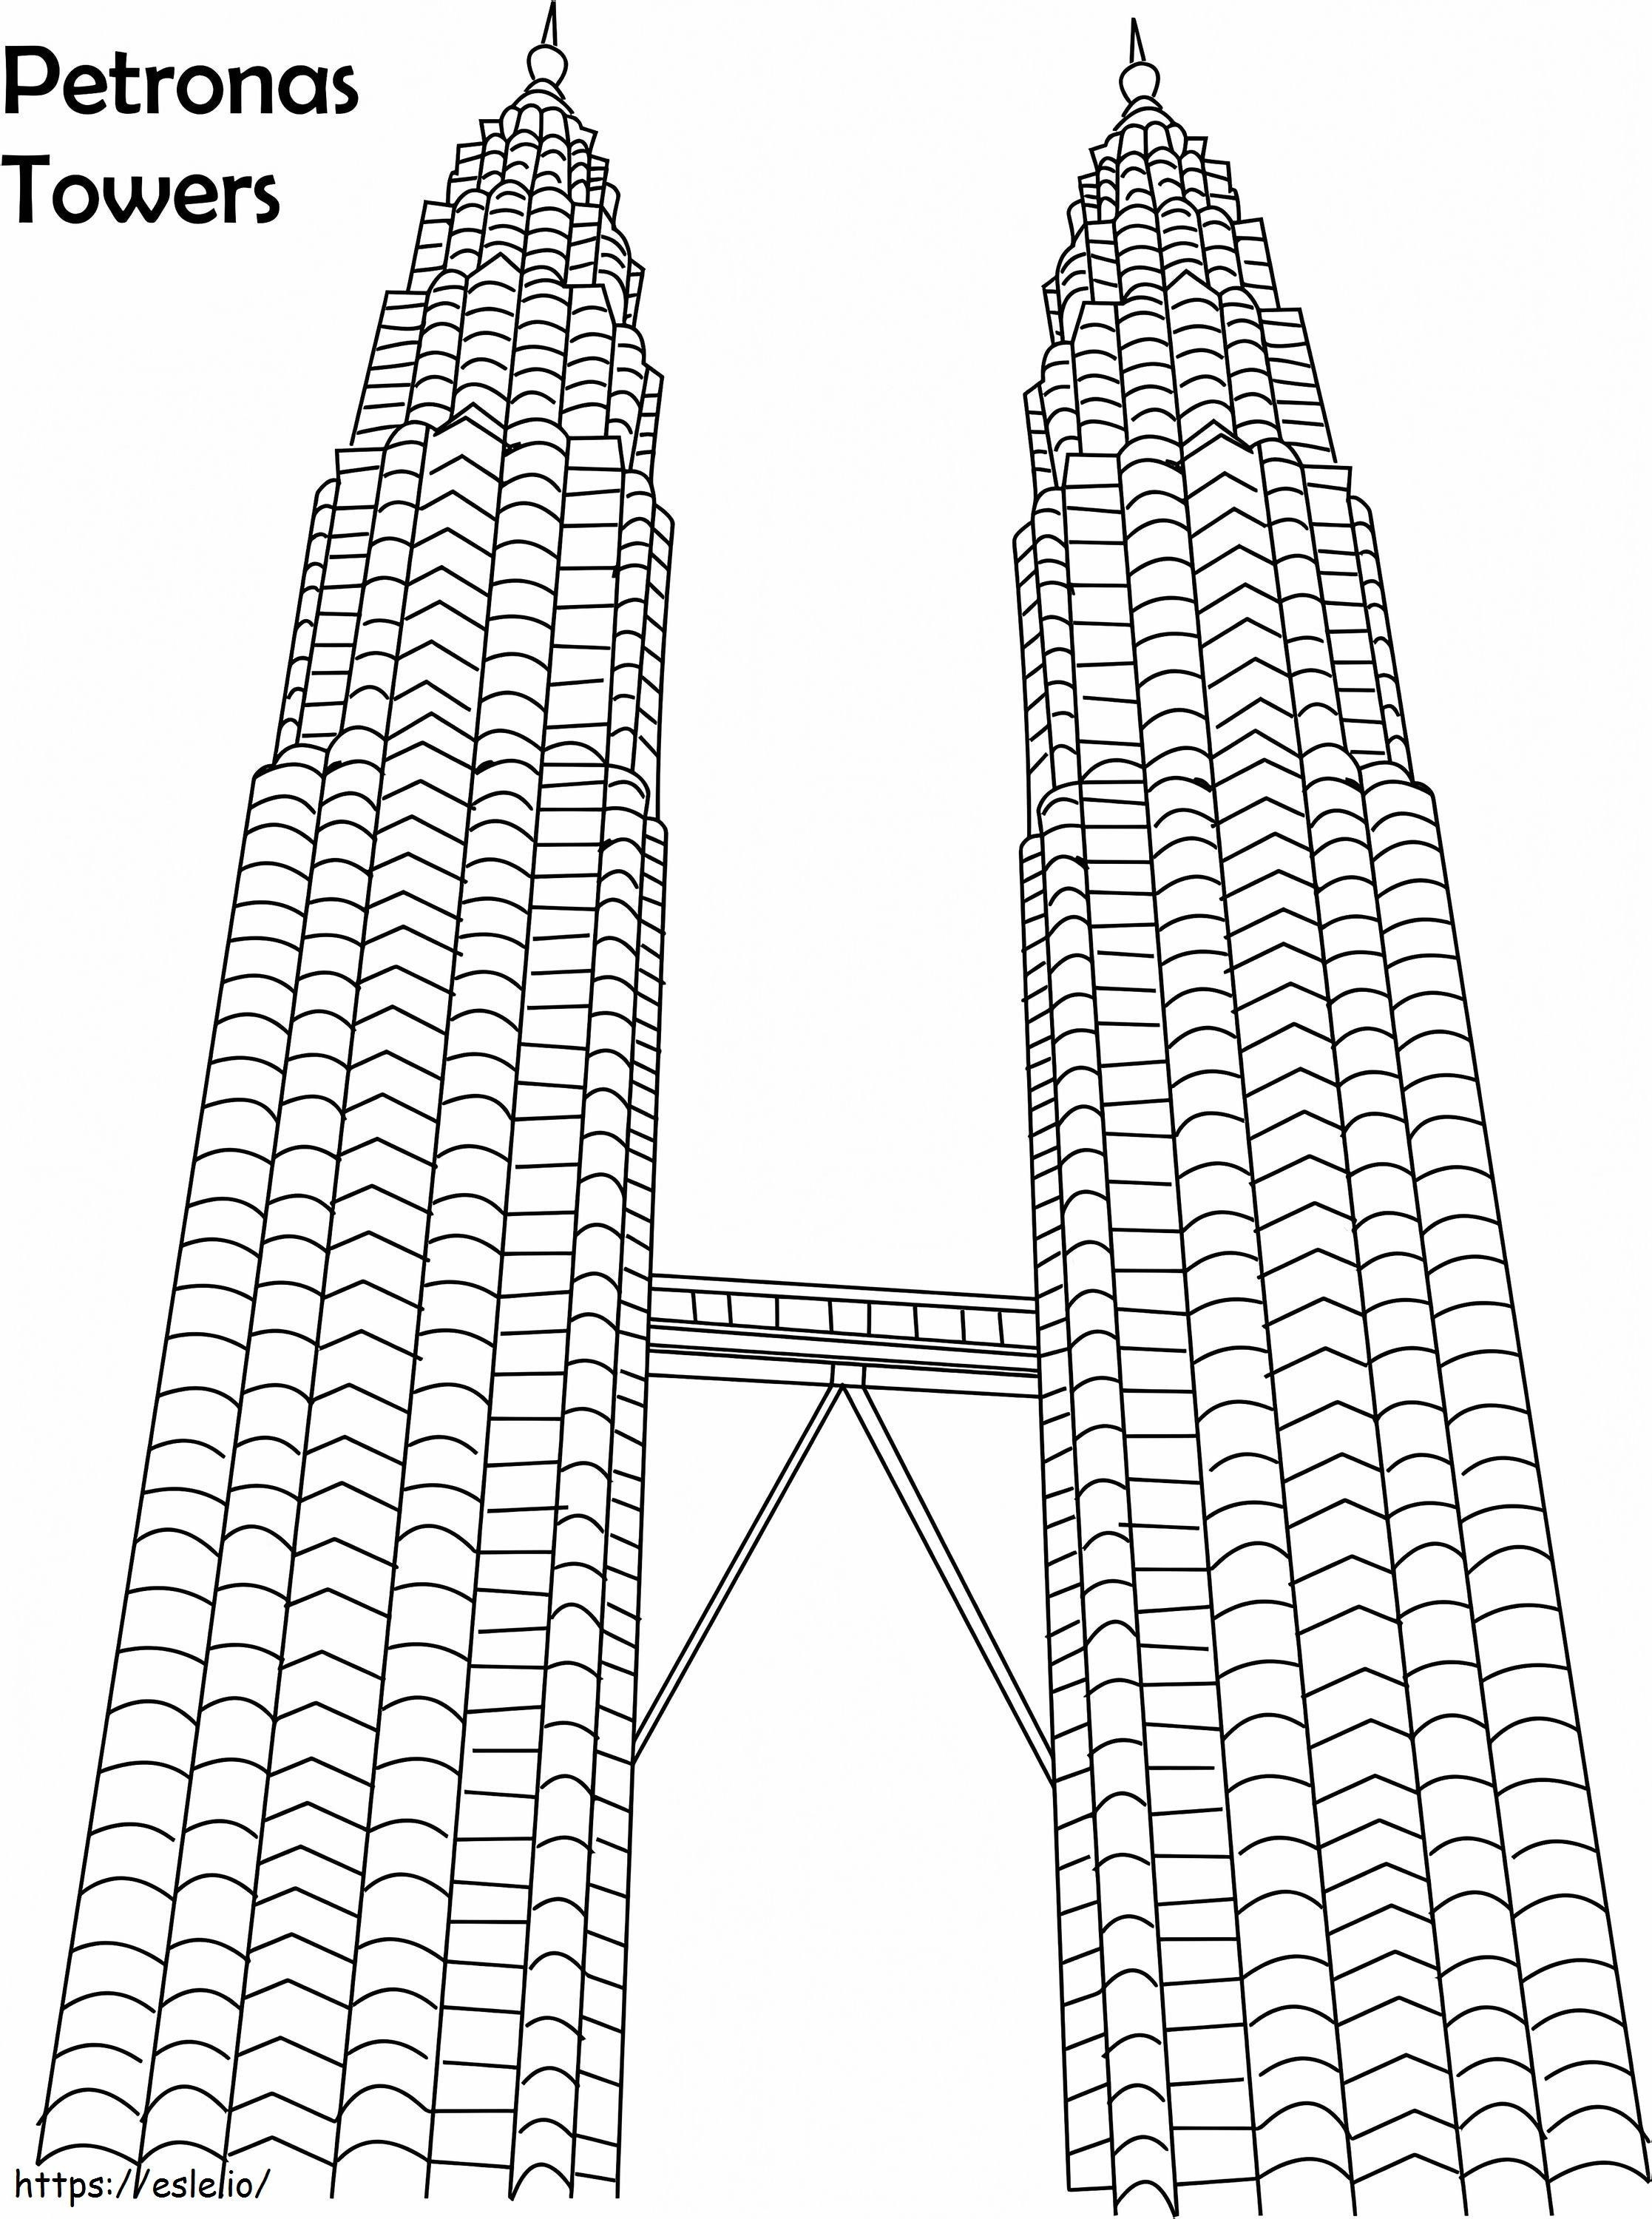 3350 29312 Petronas Towers coloring page